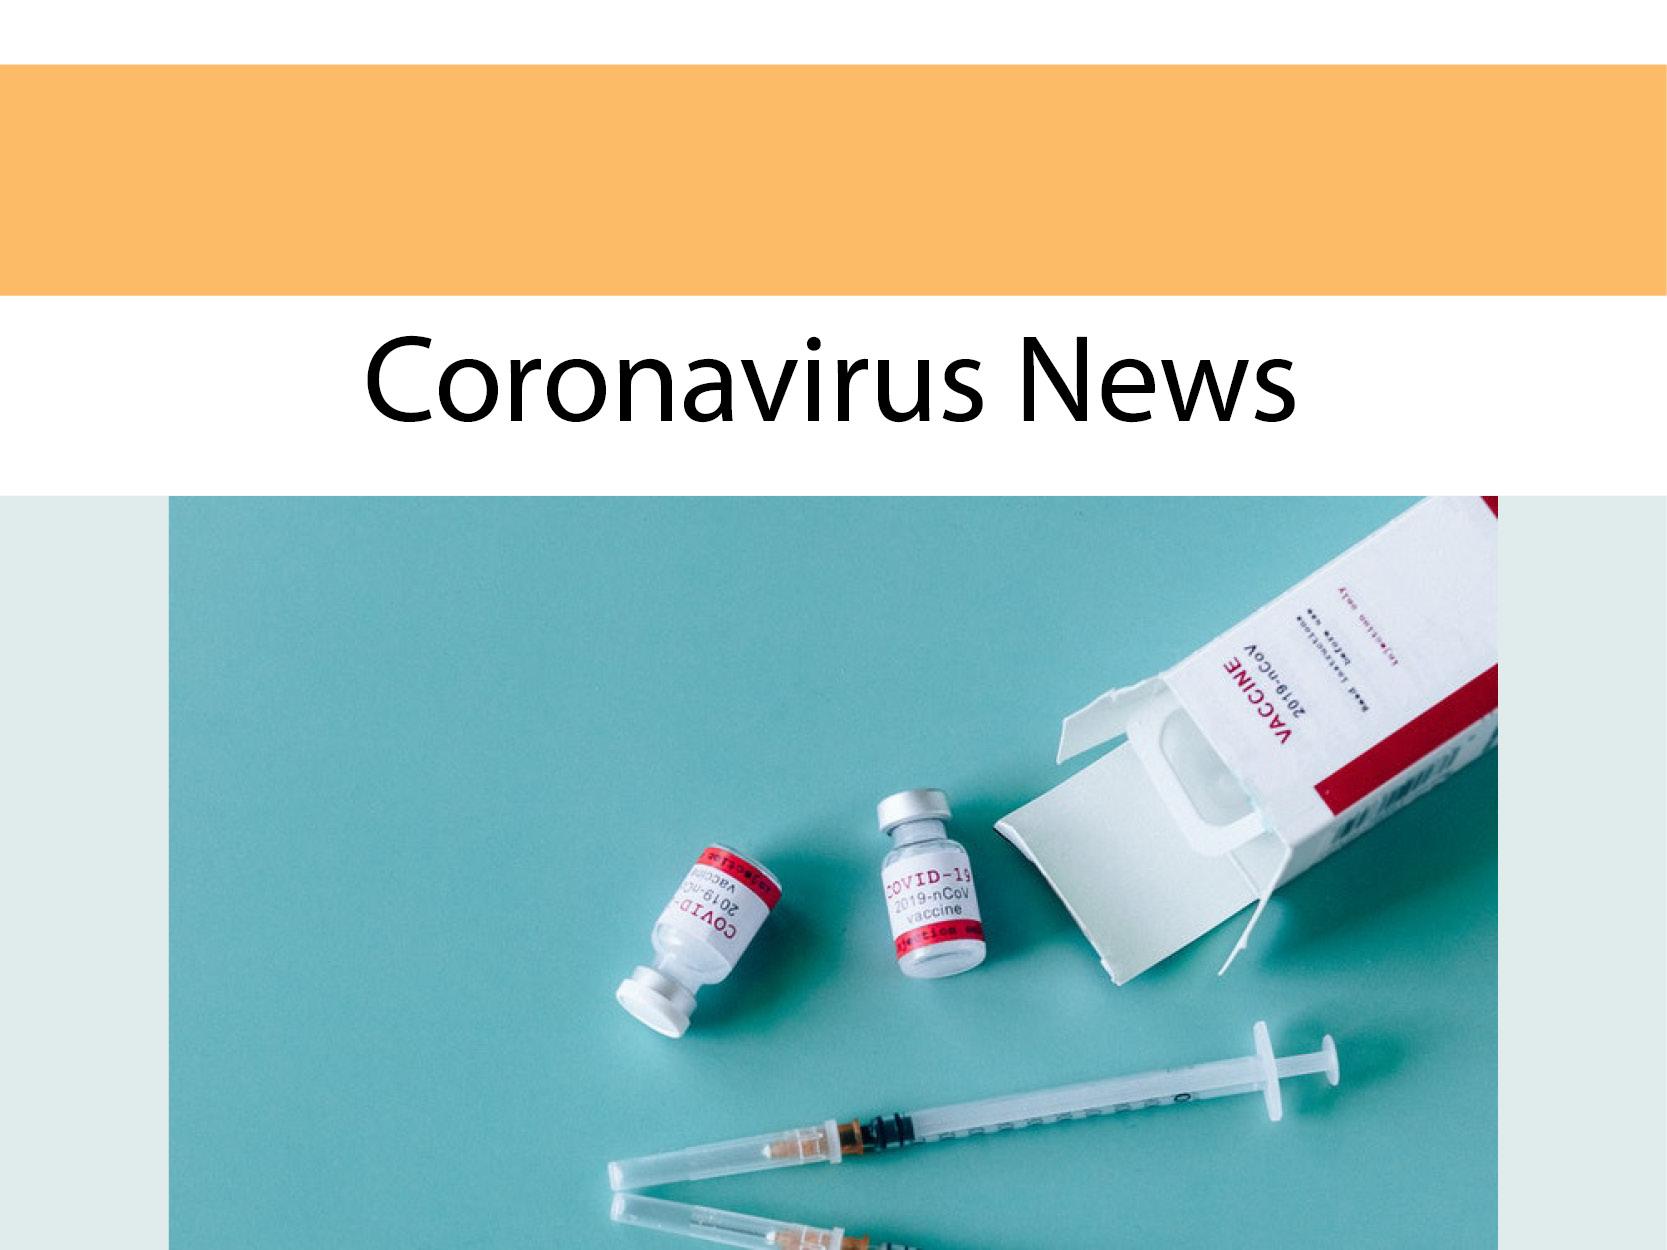 COVID-19 vaccination sites announced for Laurentides region